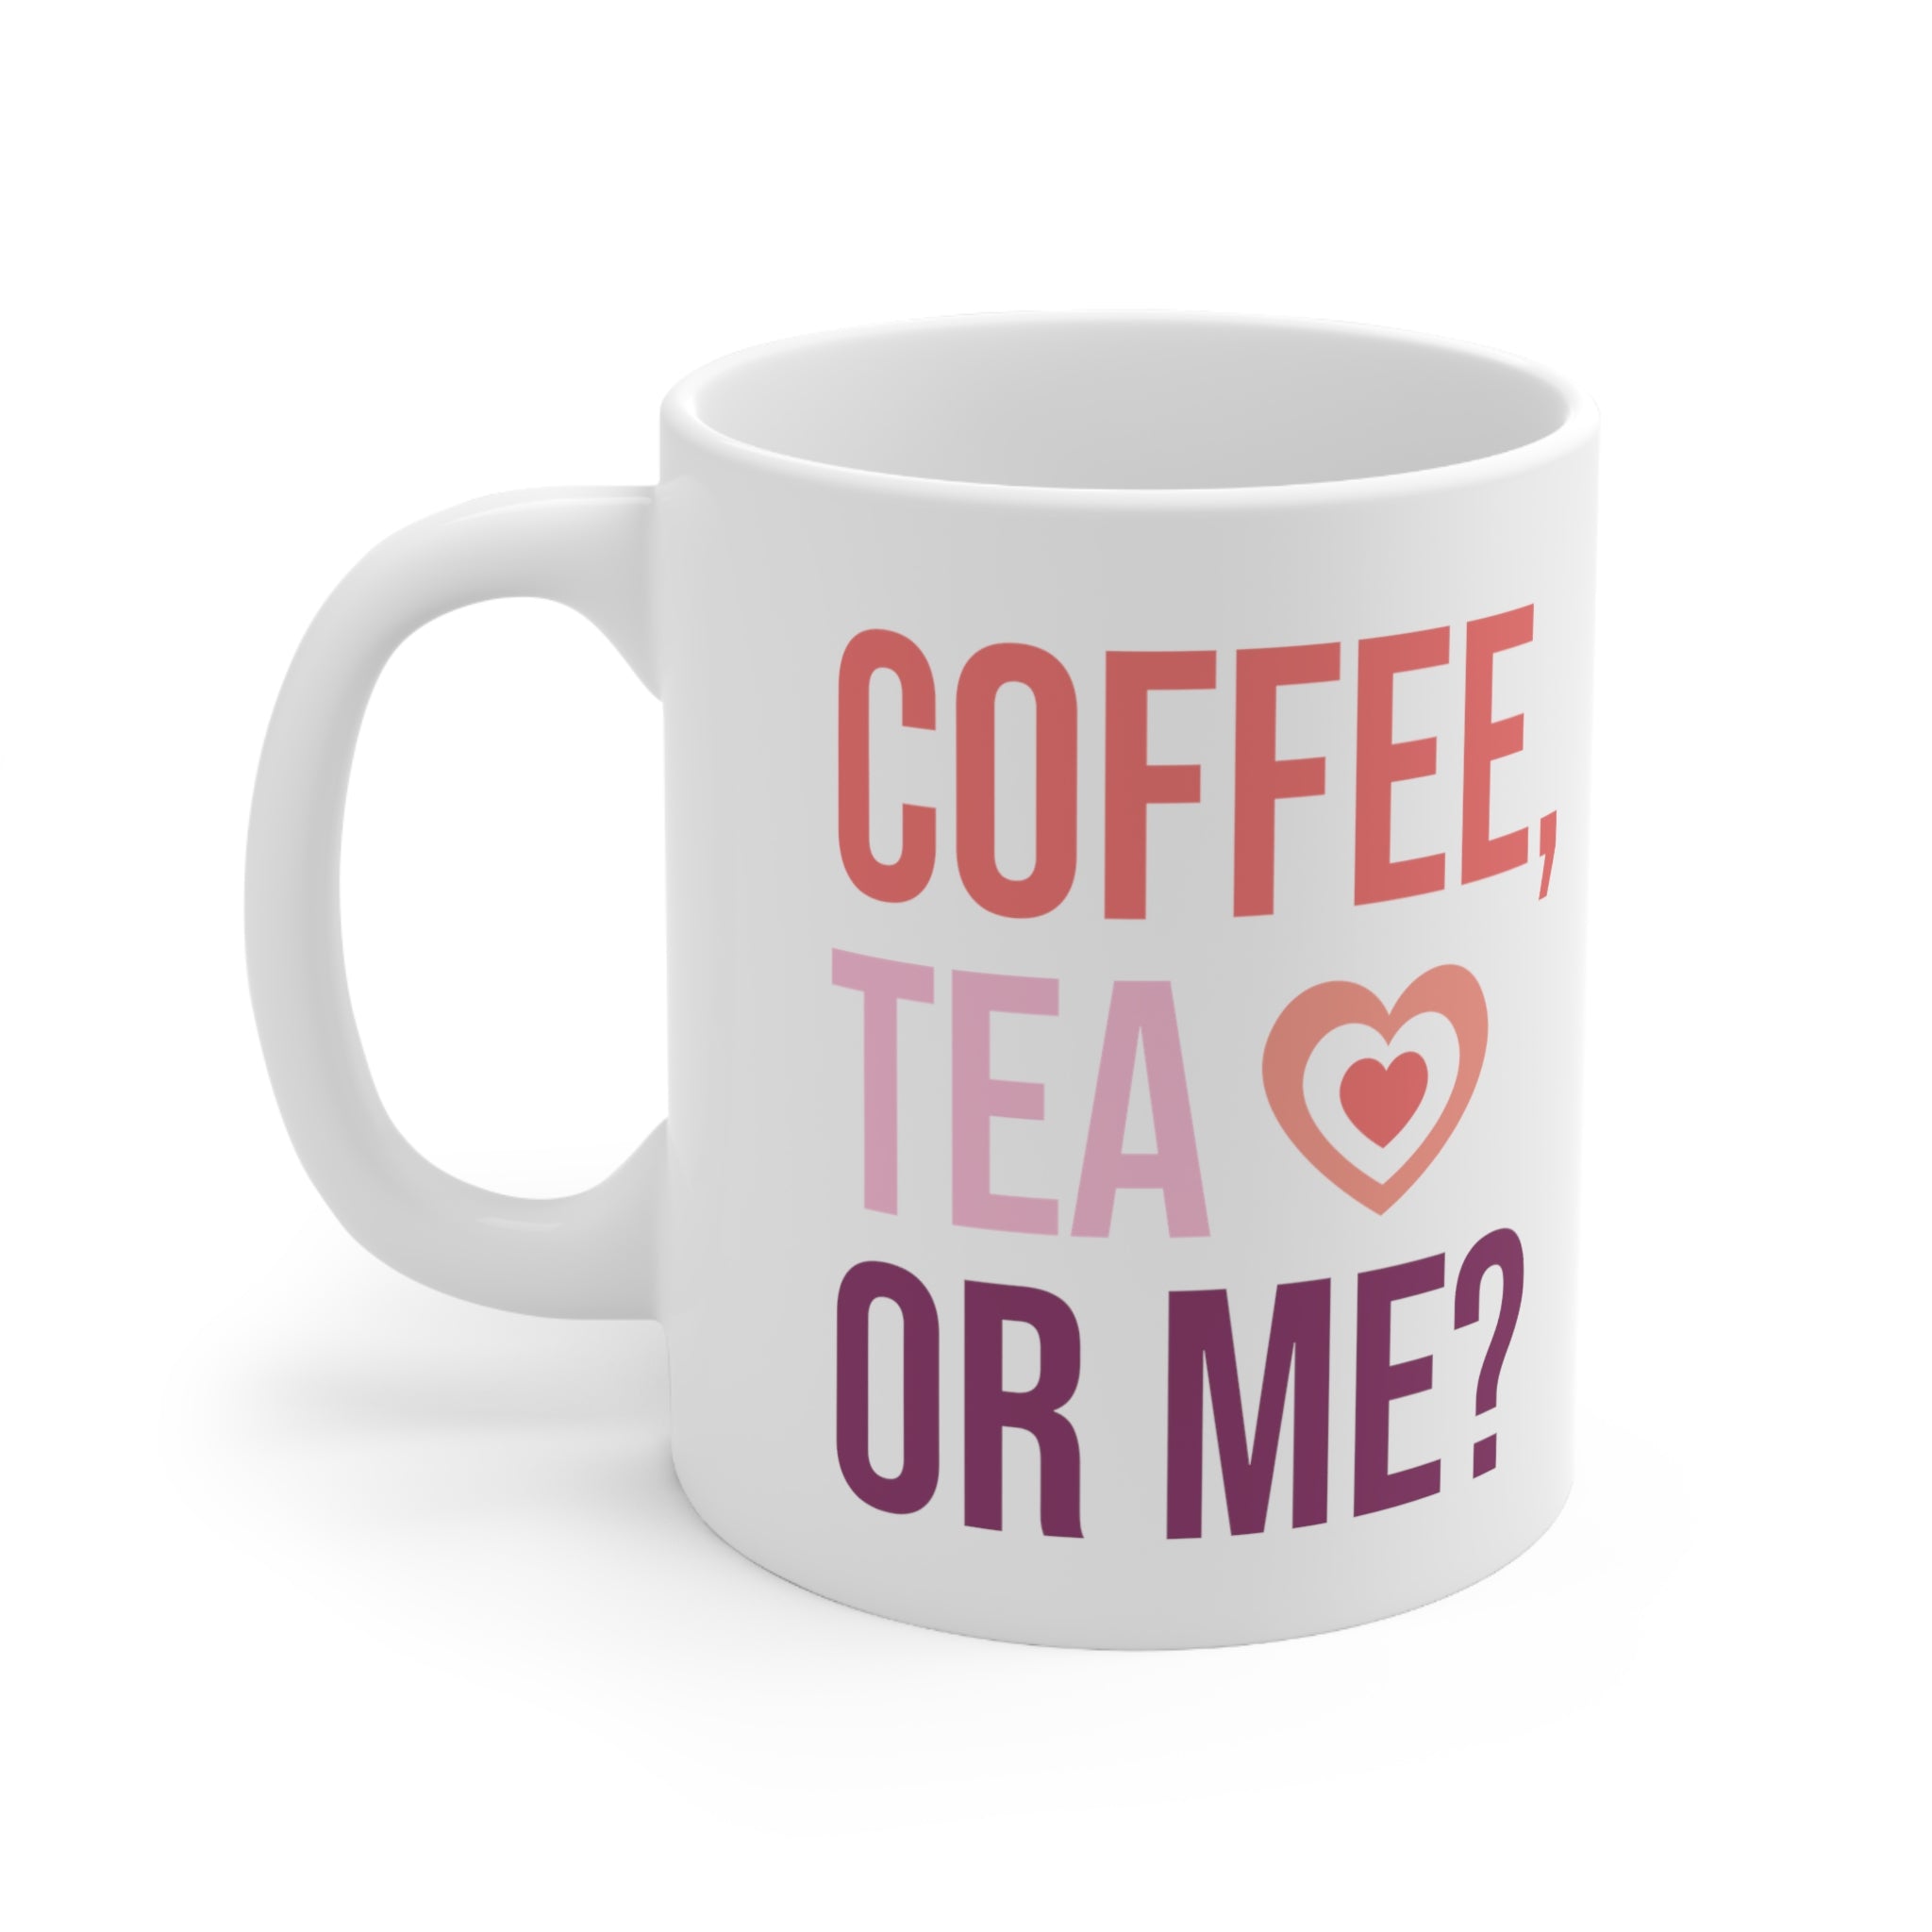 COFFEE, TEA OR ME? COFFEE MUG